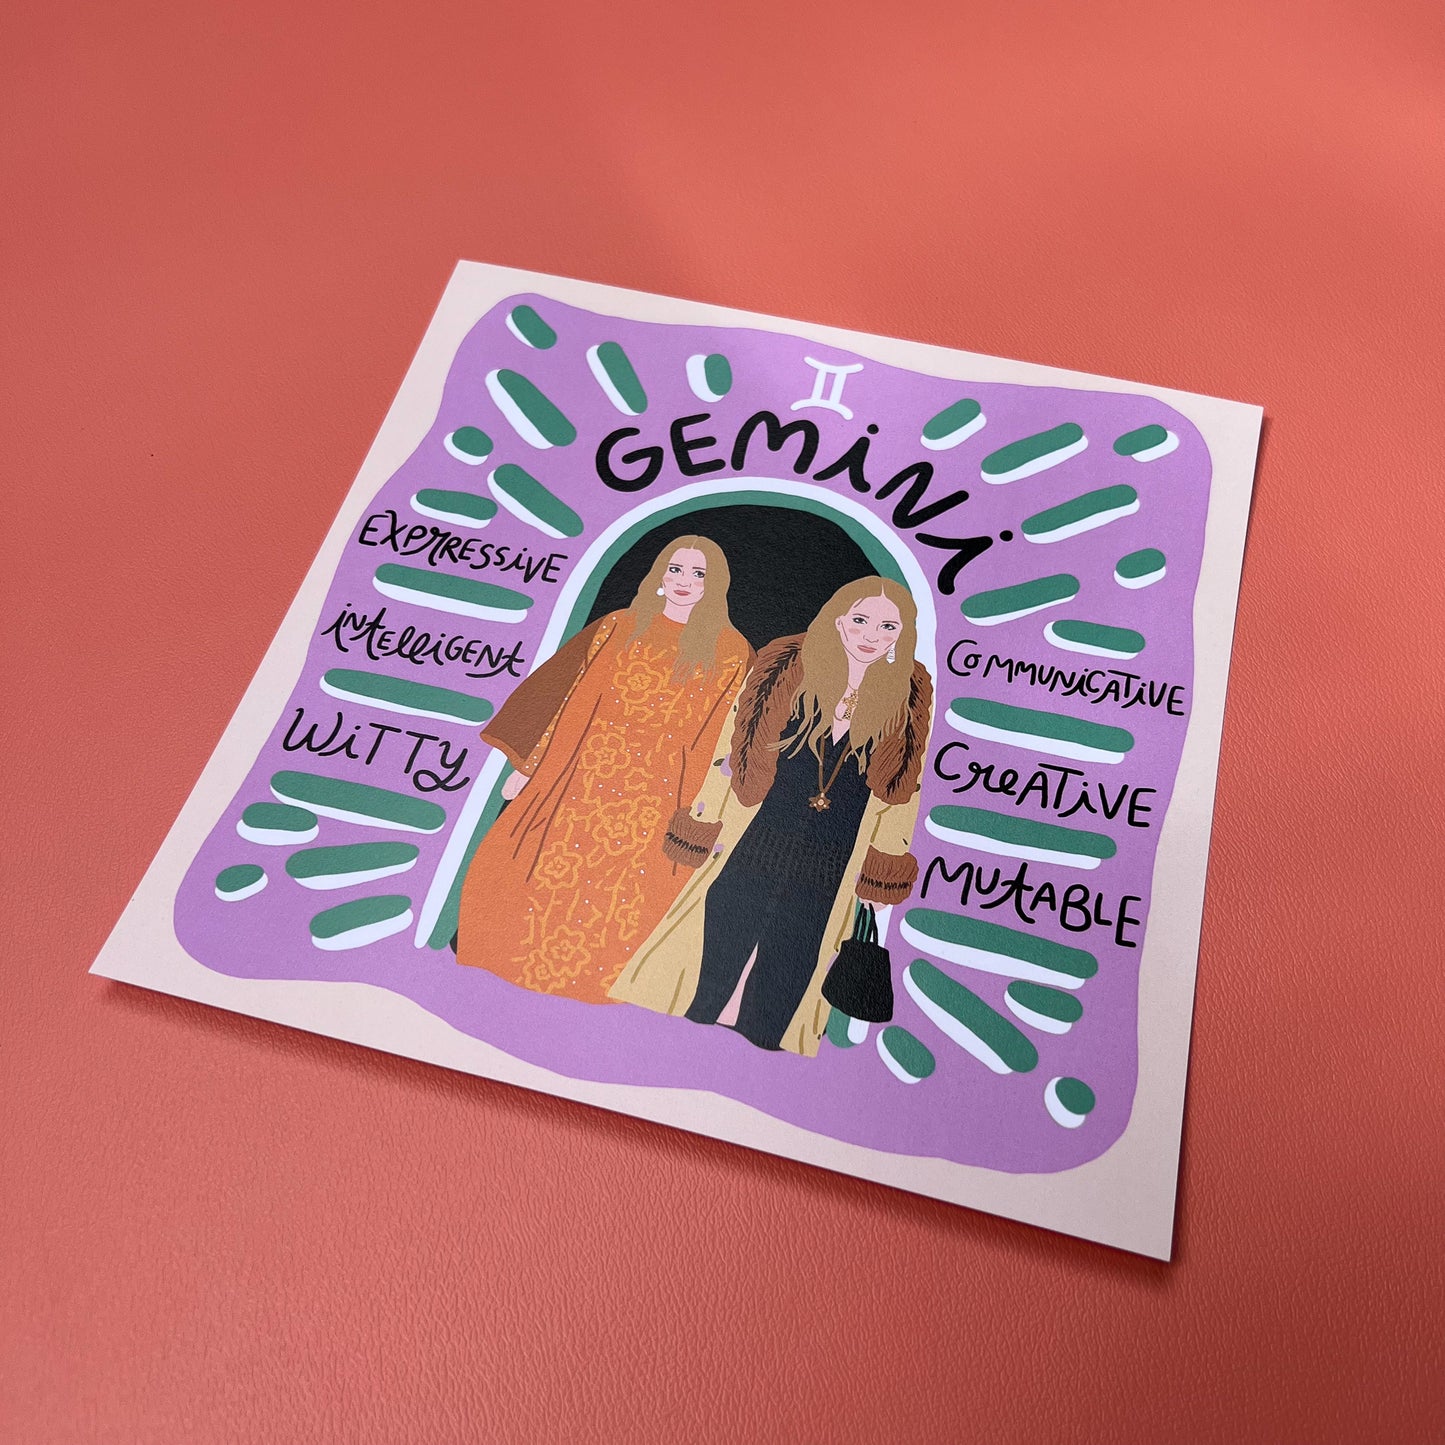 Gemini Mary-Kate and Ashley - Print - 8x8"